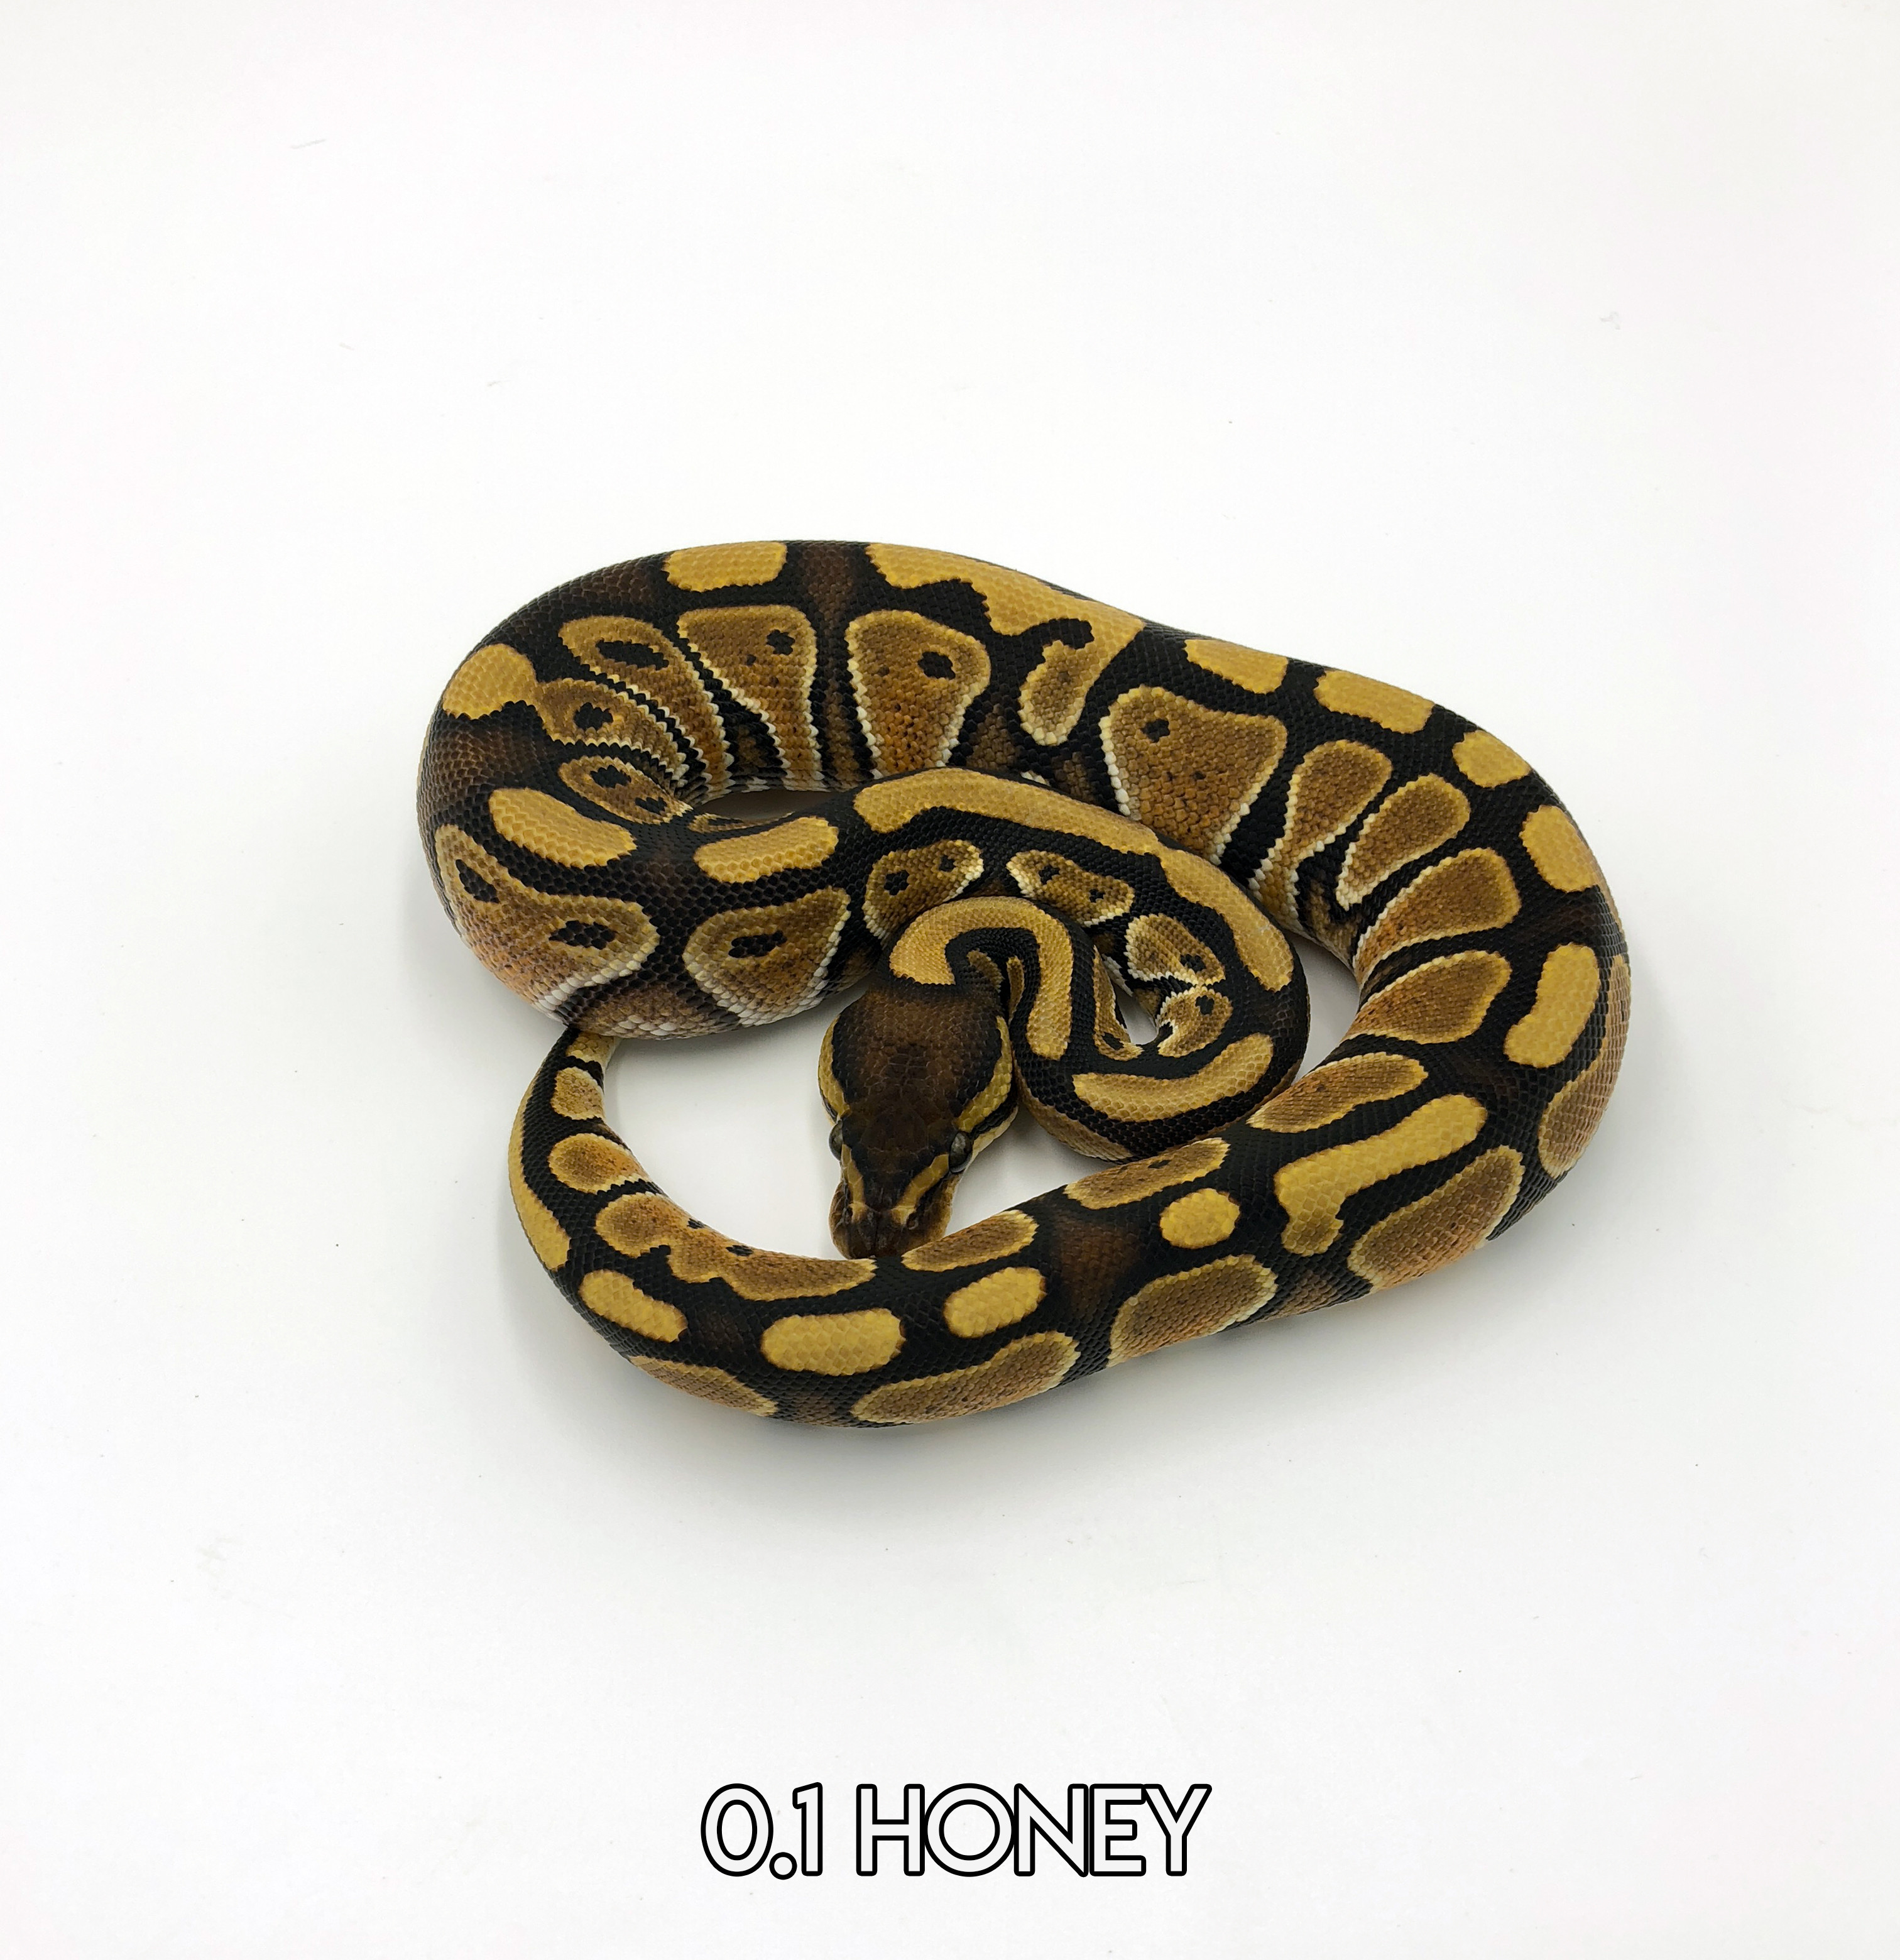 Honey Ball Python by Hellfire Exotics